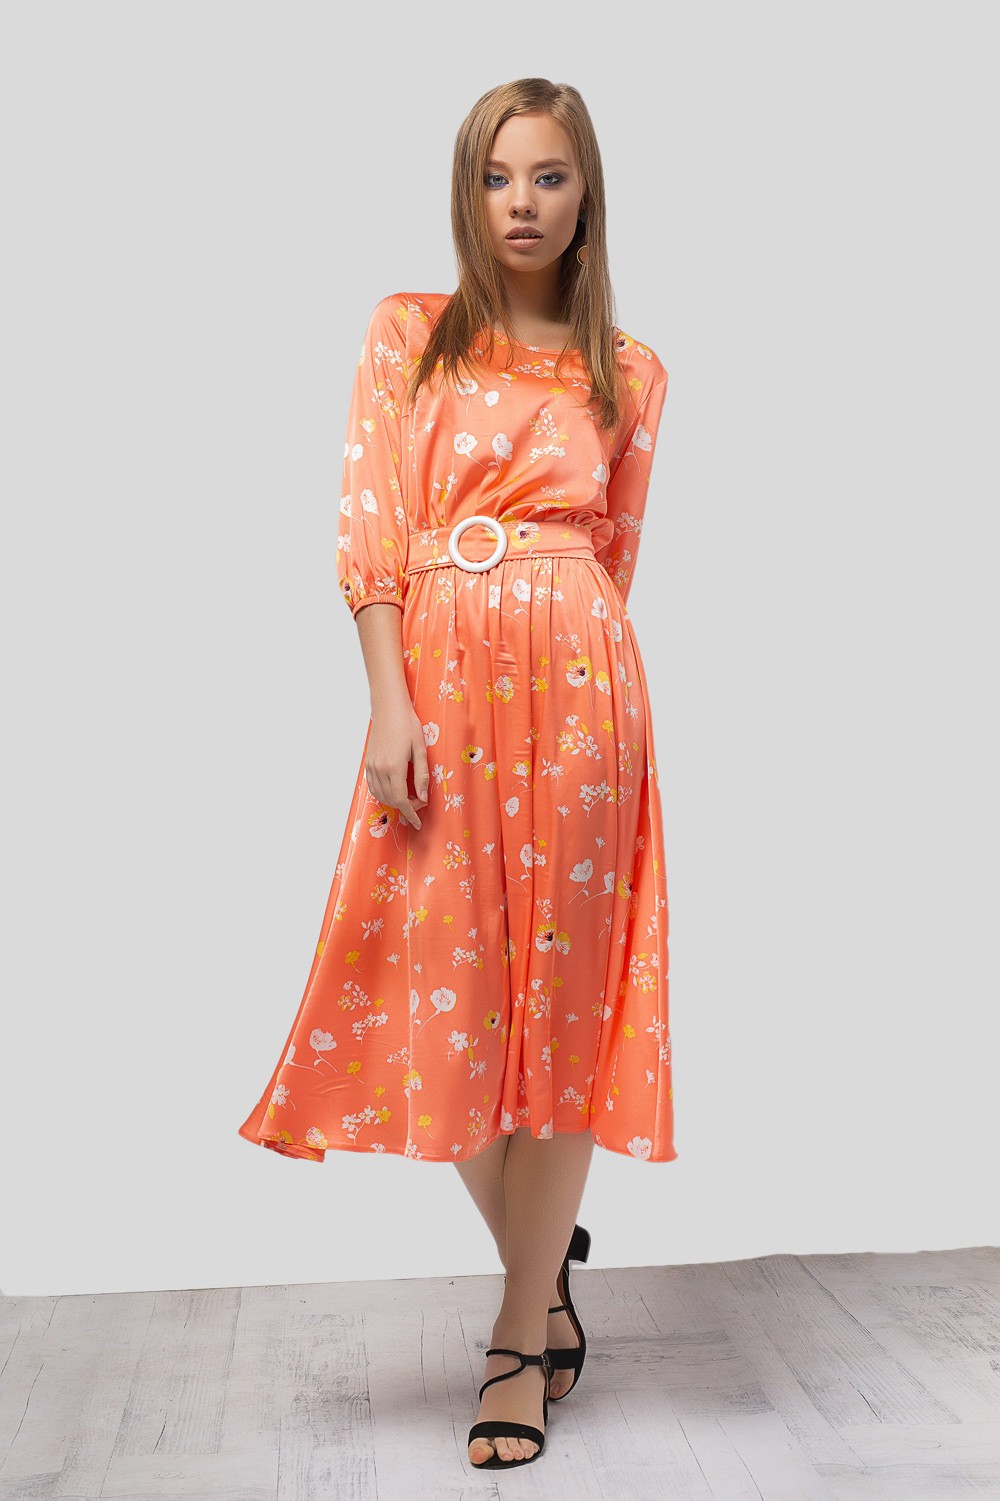 Coral silk dress